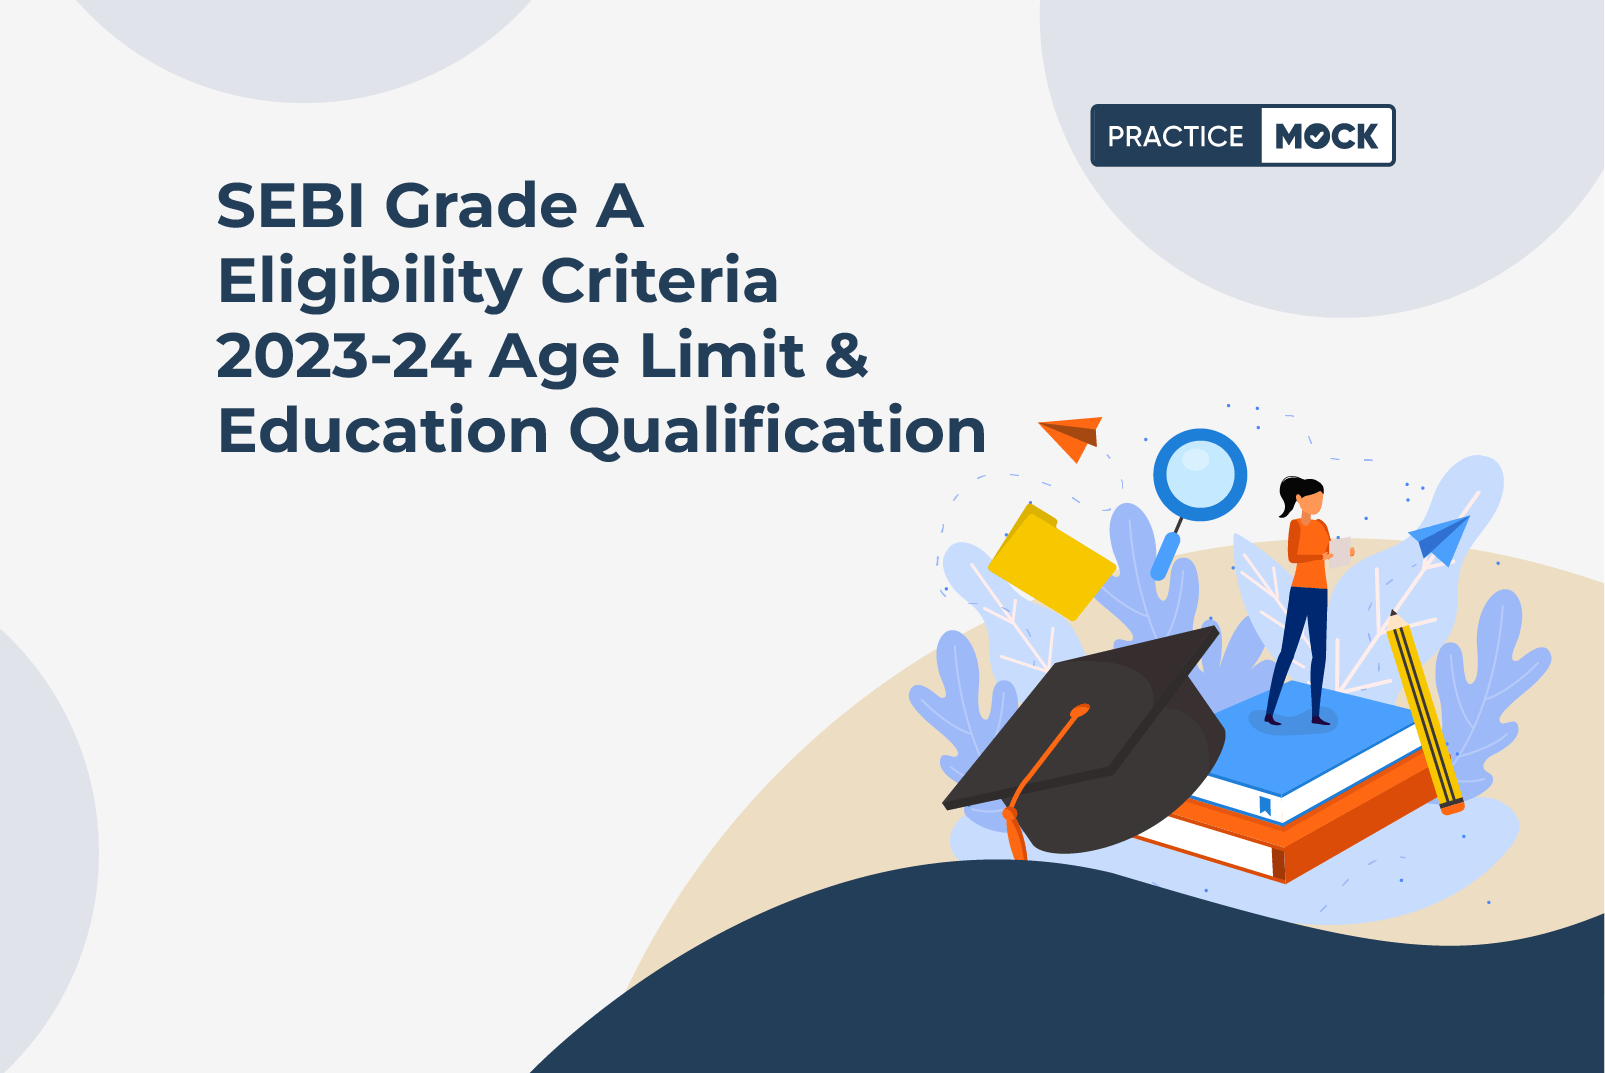 SEBI grade A Eligibility Criteria 2023-24